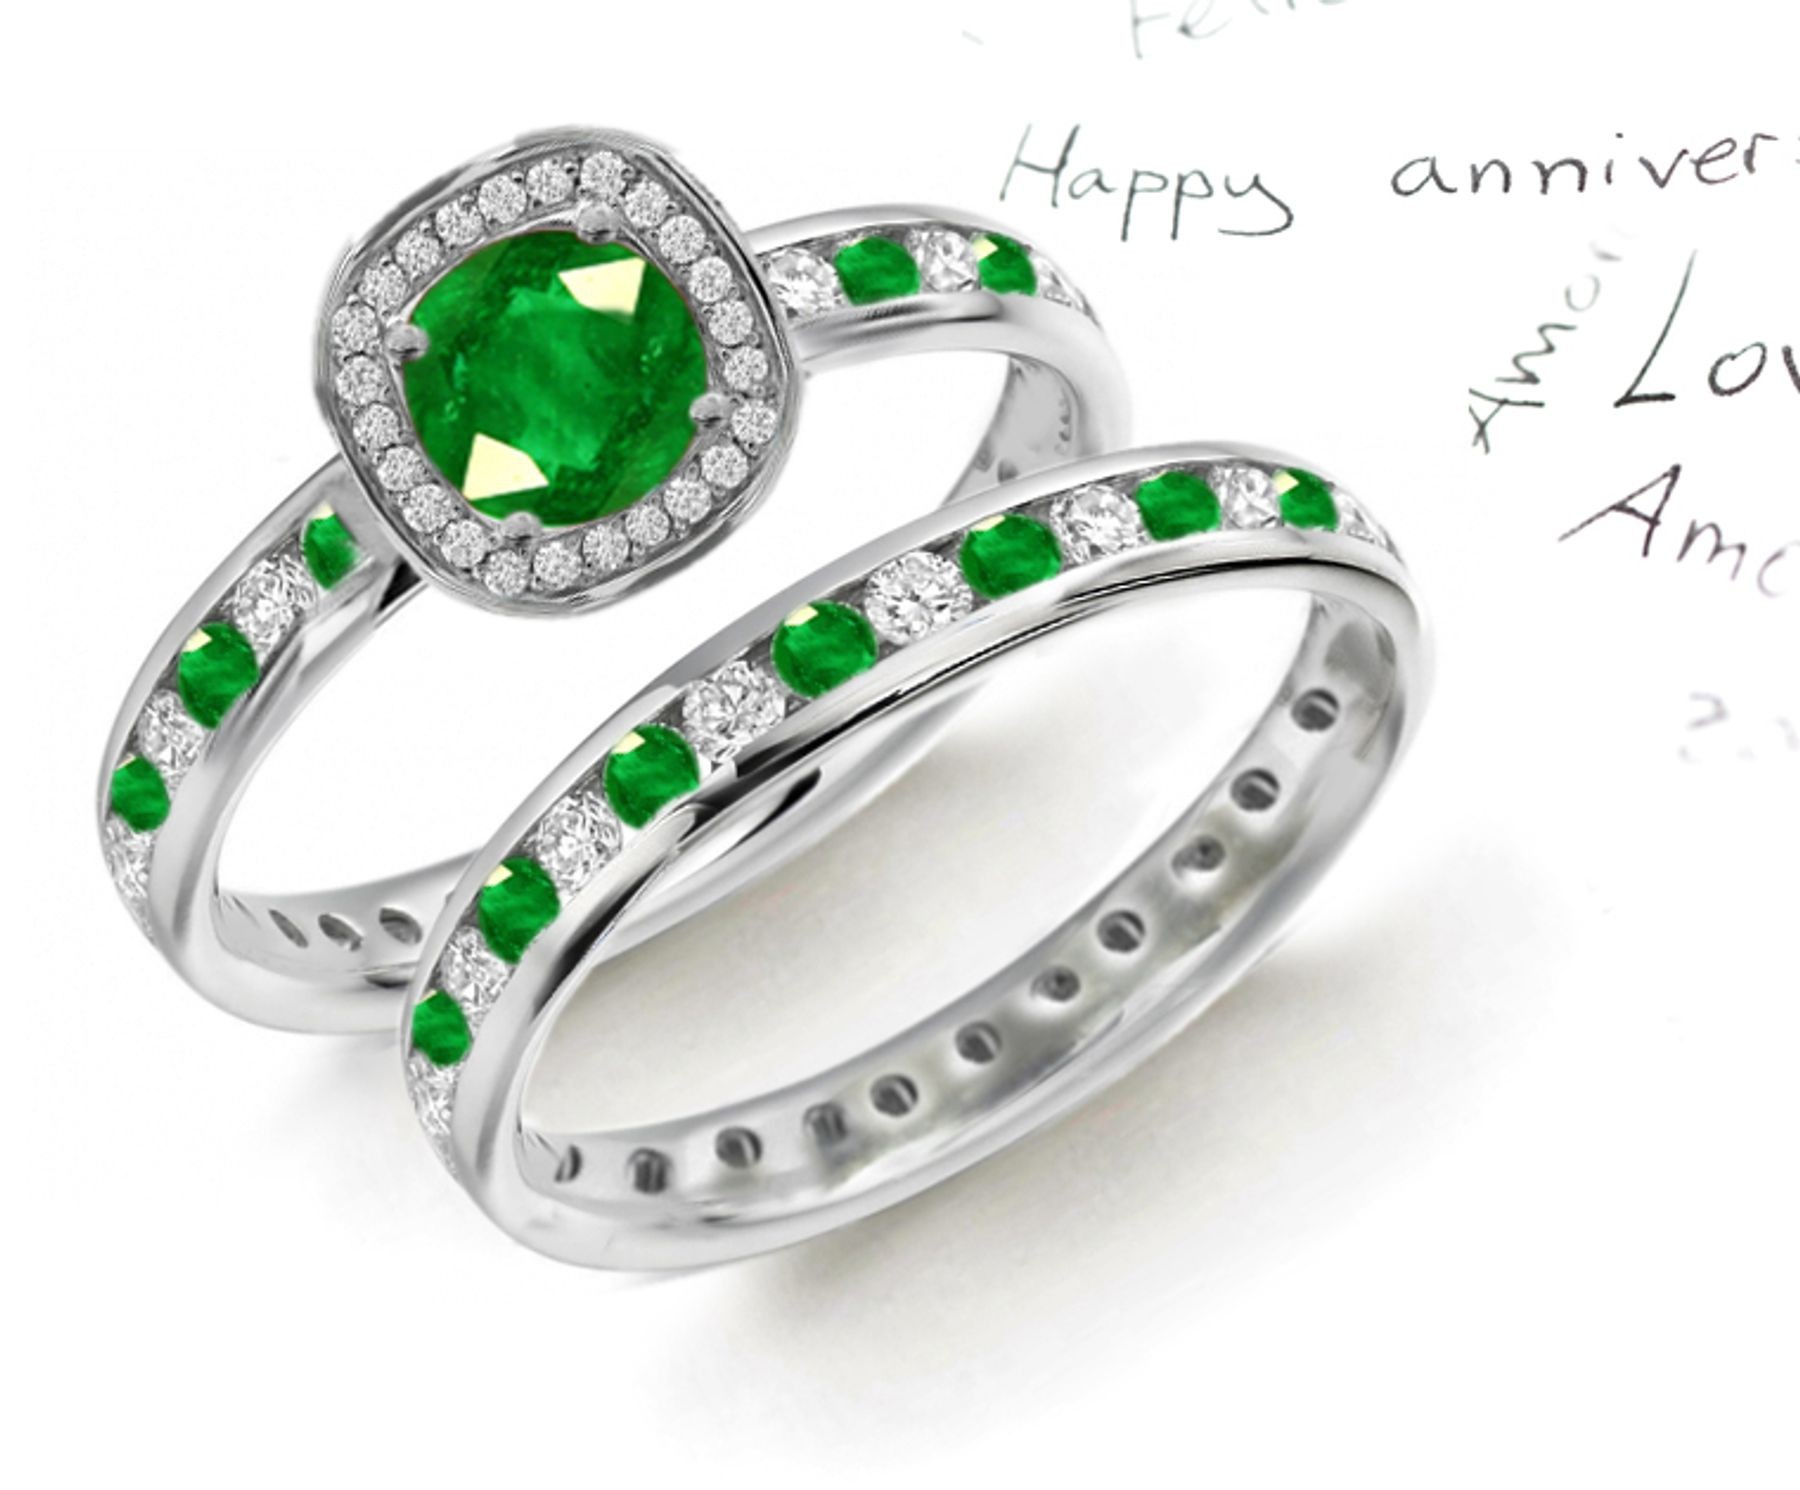 NEW PRODUCTS: 14k Gold & Platinum Emerald Diamond Halo Engagement Ring Emerald & Diamond & Emerald Band